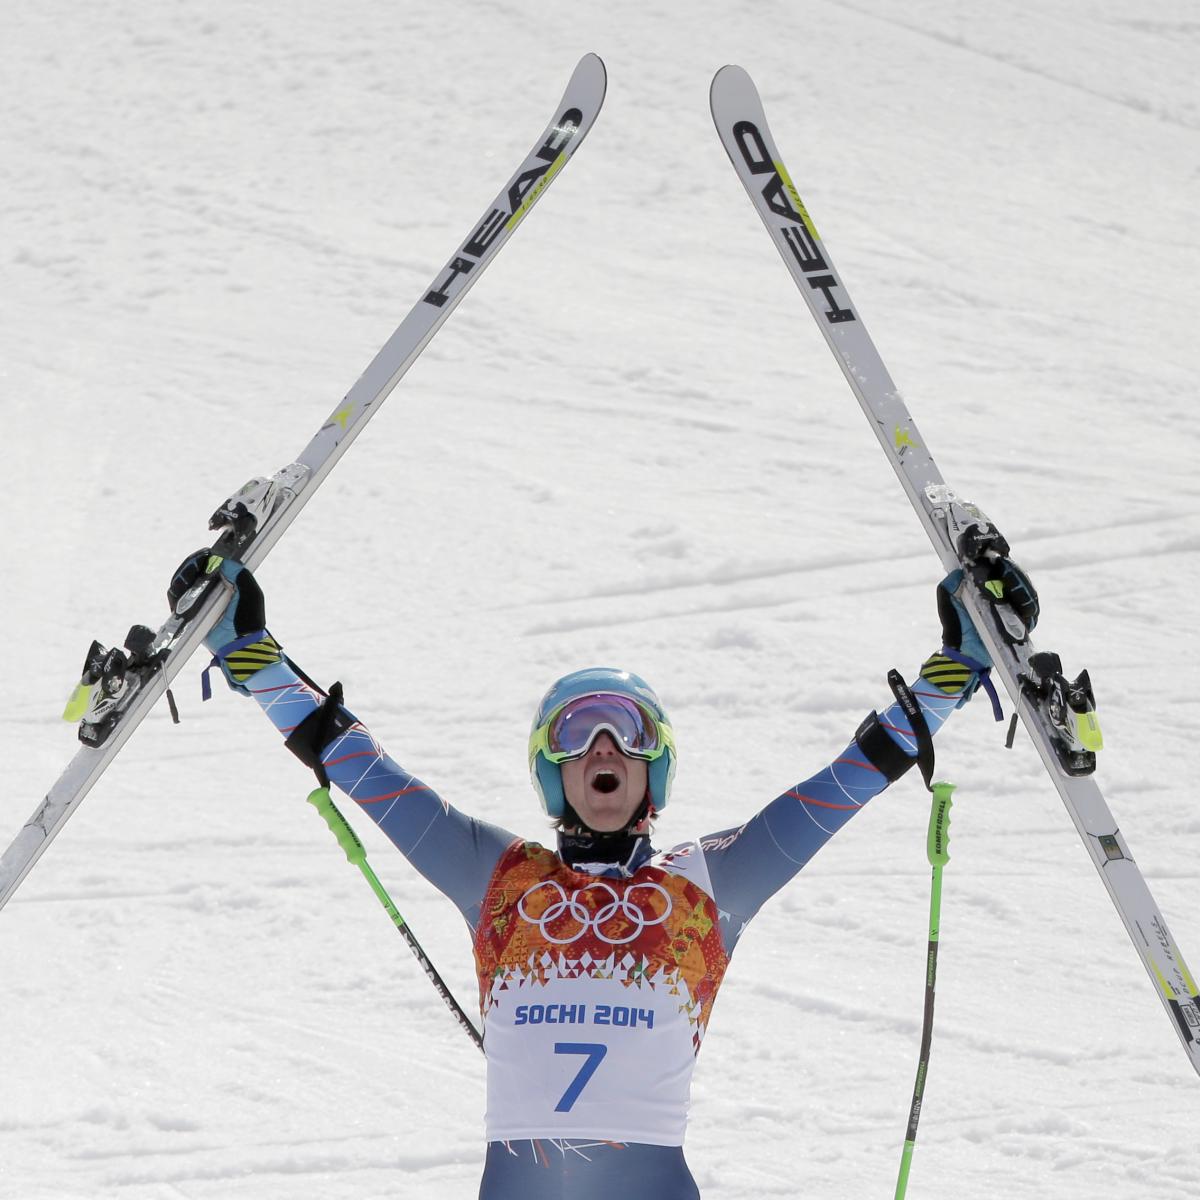 Olympic Alpine Skiing Giant Slalom Results 2014: Men's Medal Winners ...